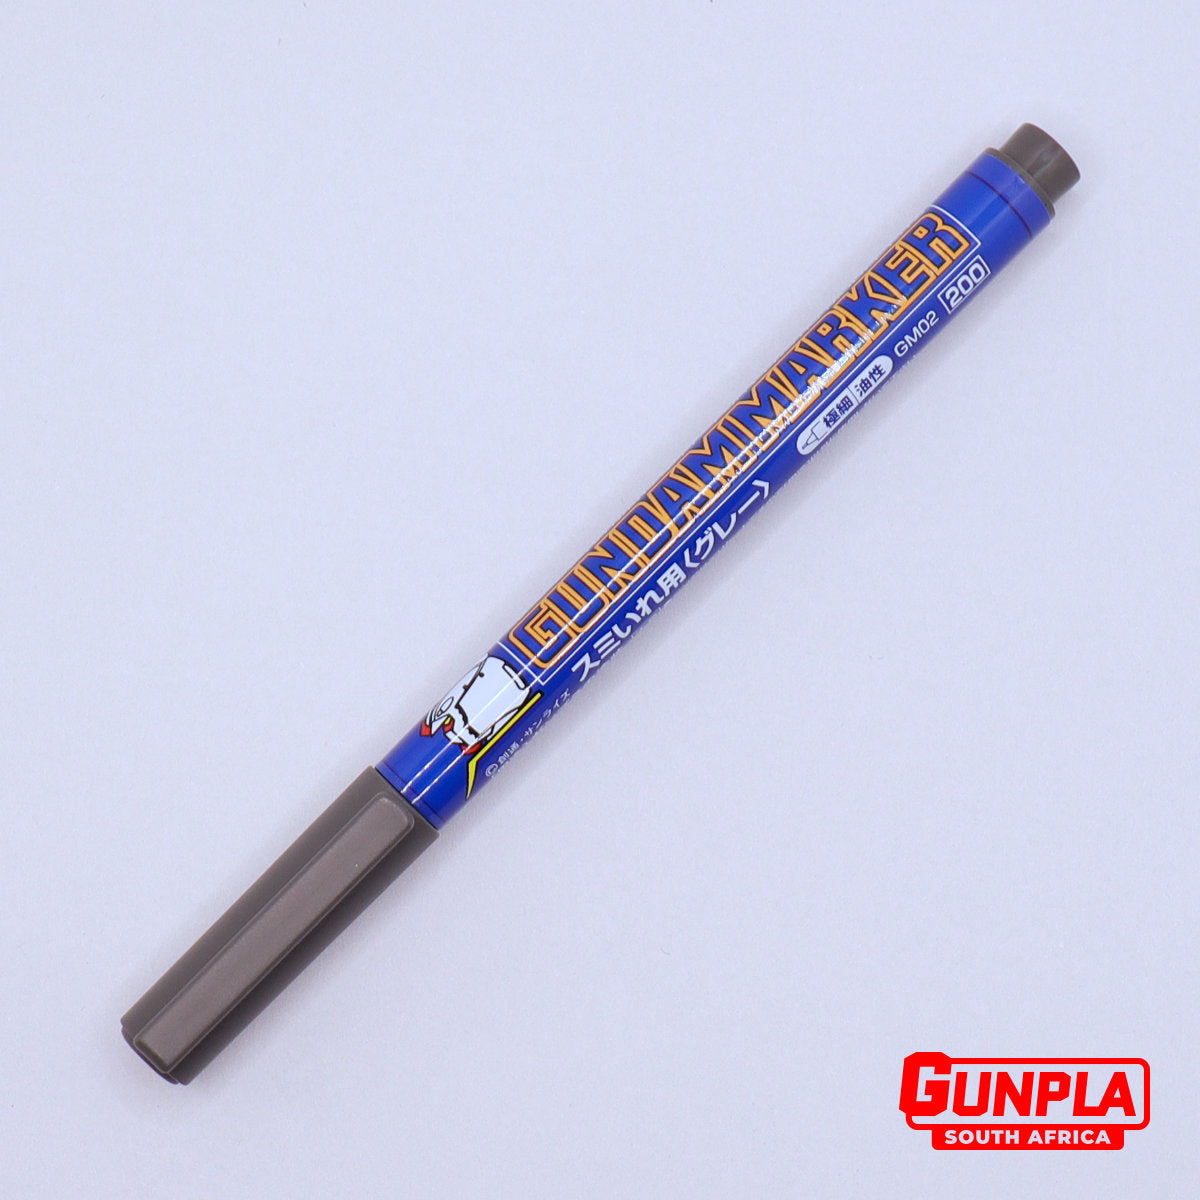 Gundam Marker GM02 Gray Fine-tip (For Panel Lining), GUNPLA SA